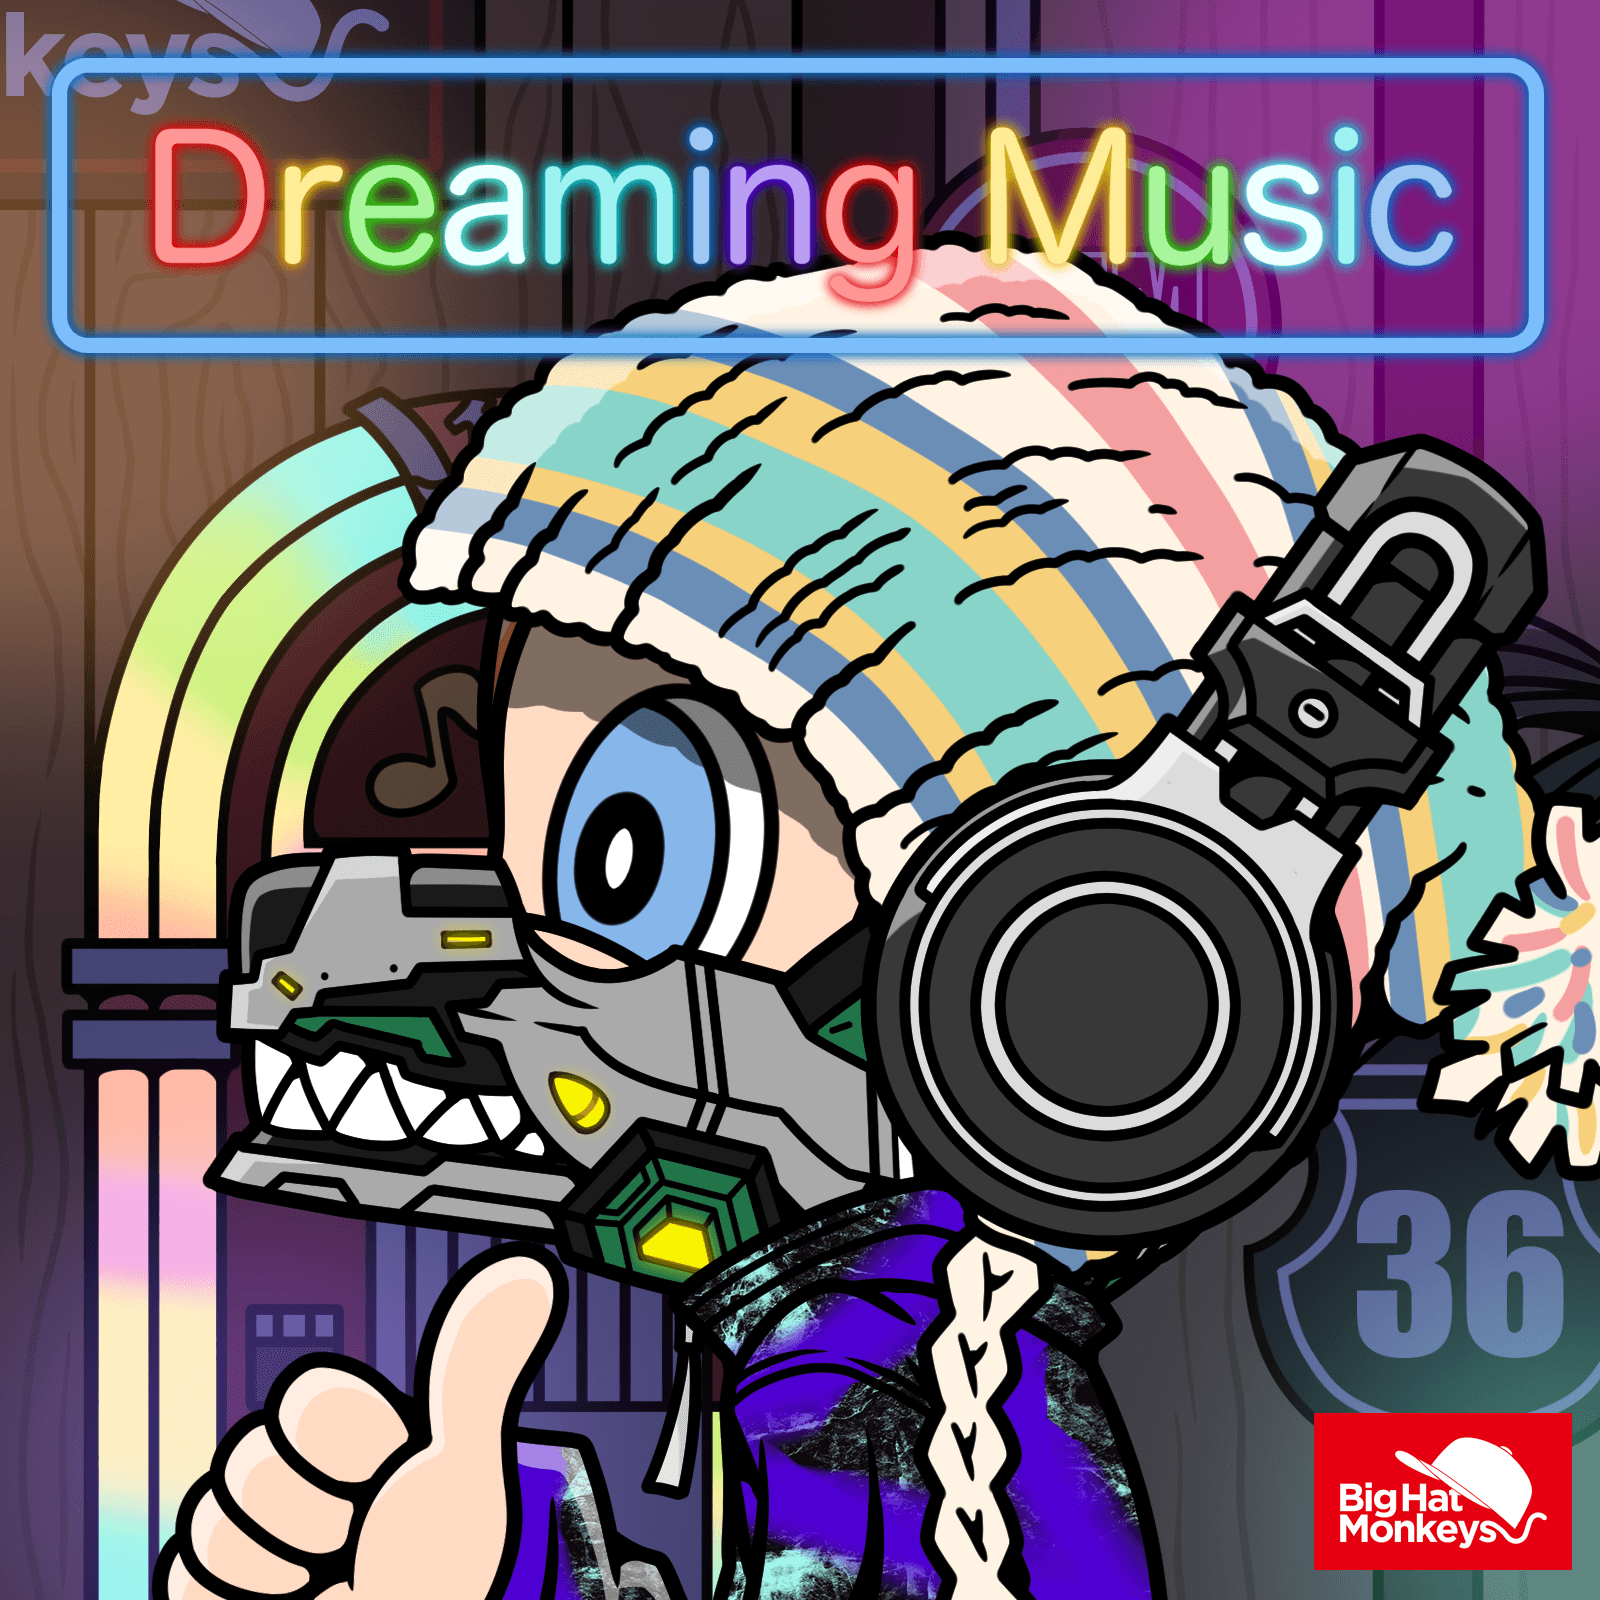 Dreaming Music #0150